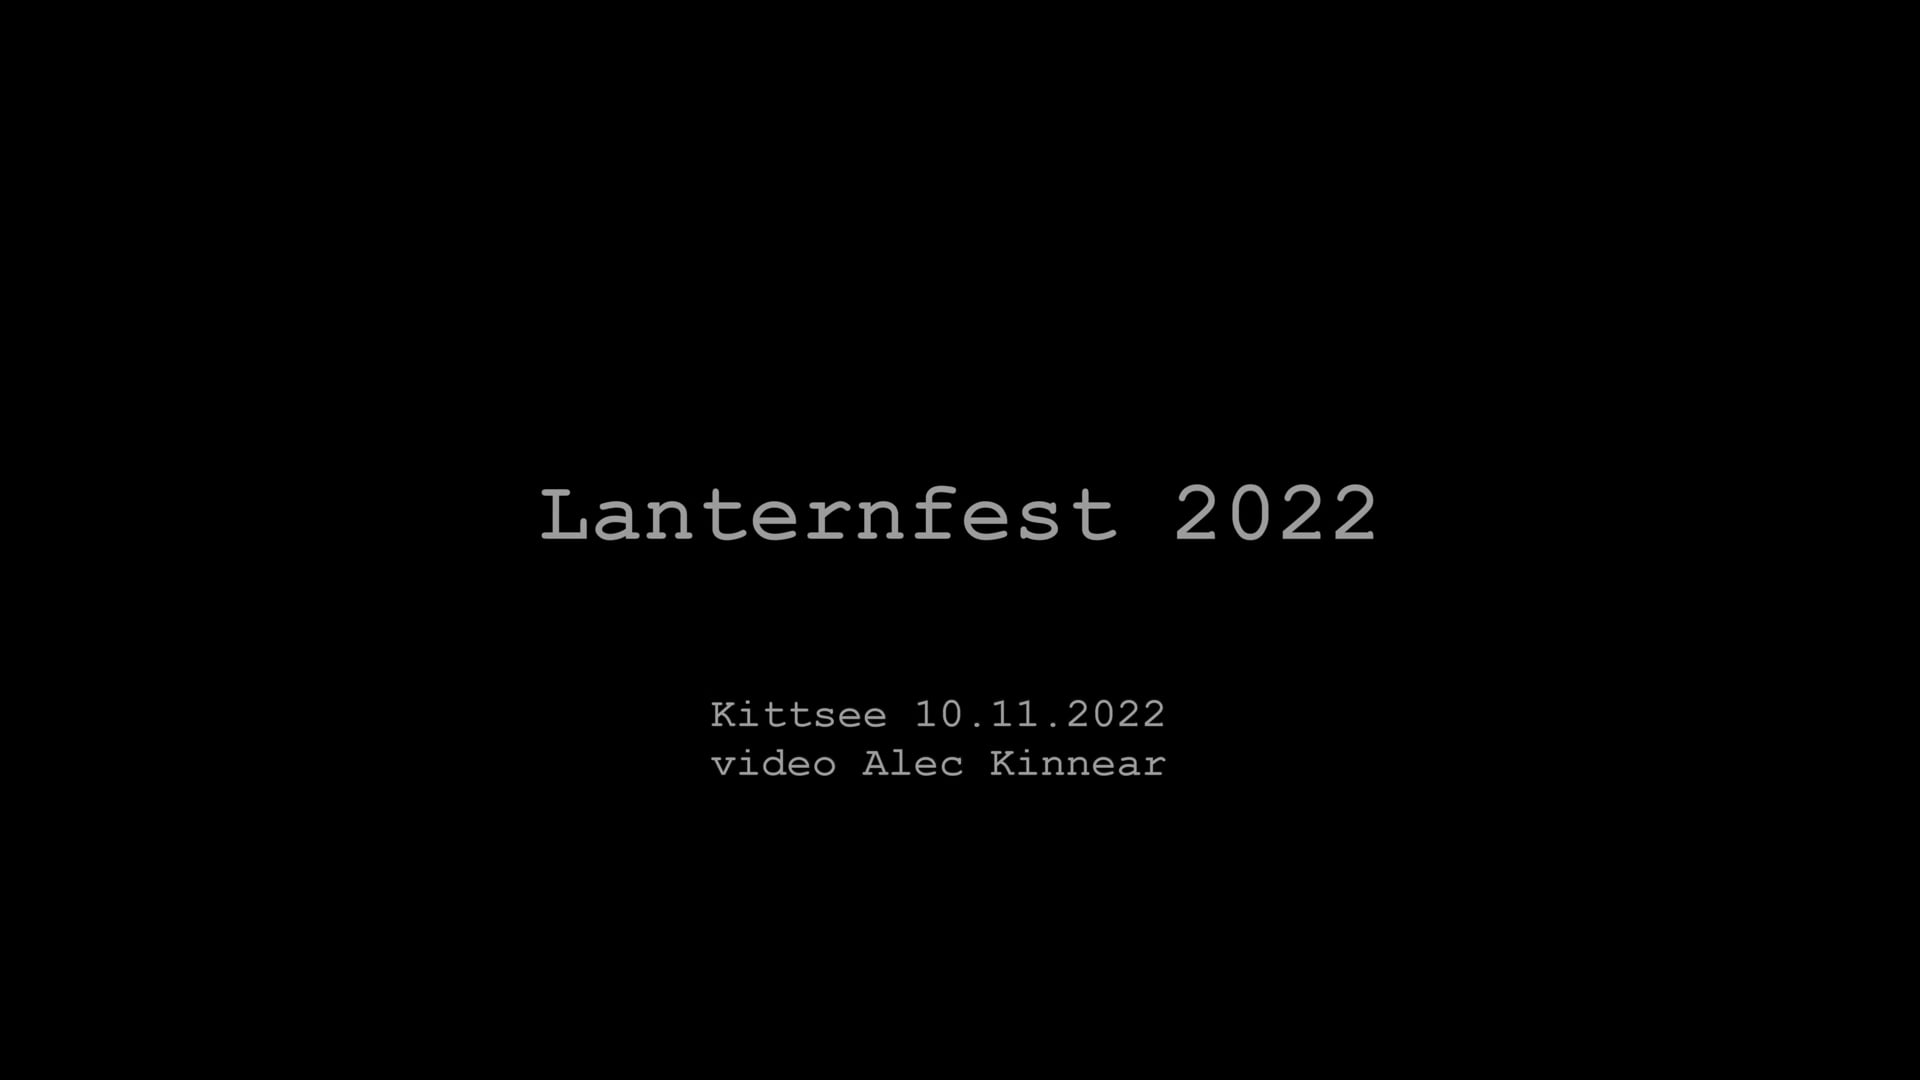 Lanternfest